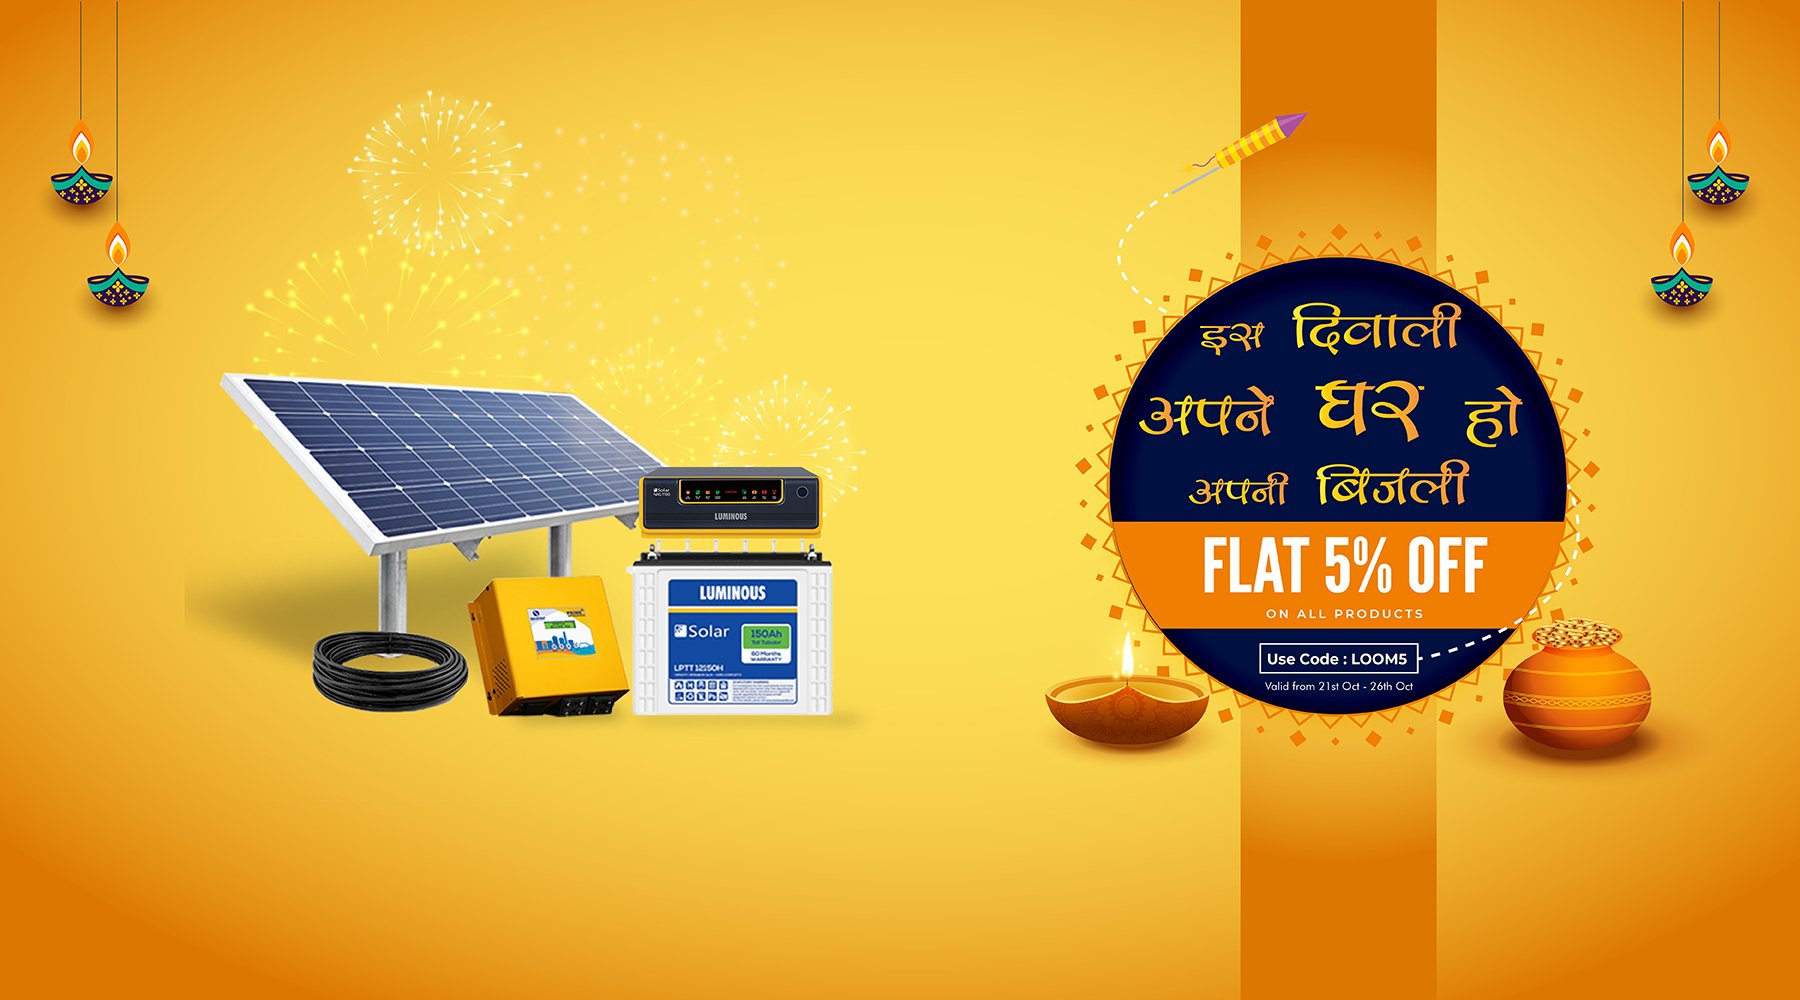 Diwali Sale 2019 - Buy Solar Panel, Inverter, Battery on this Diwali